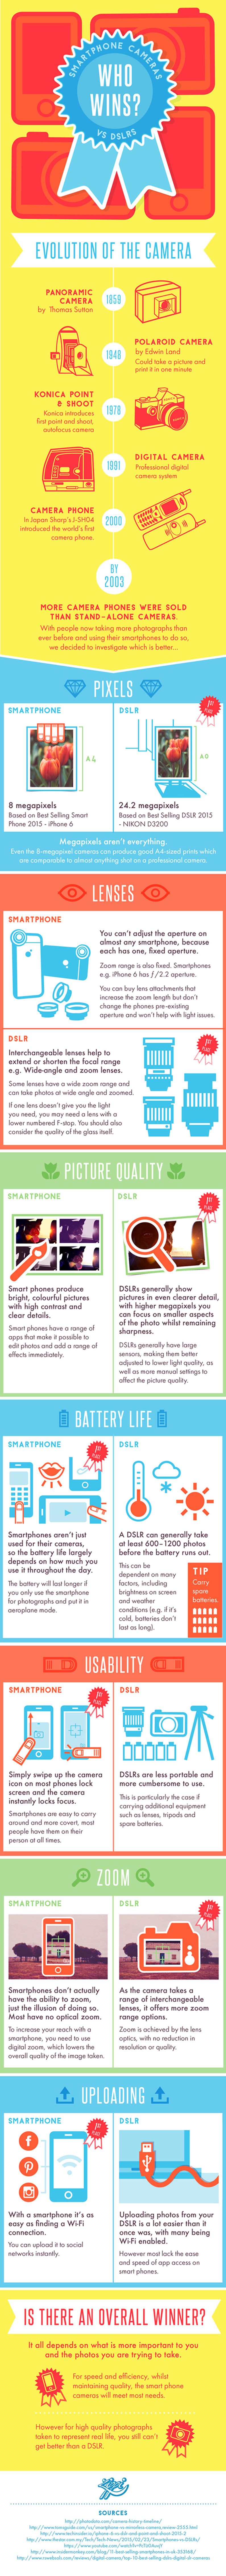 Who Wins Smartphone Cameras Vs DSLRs Infographic